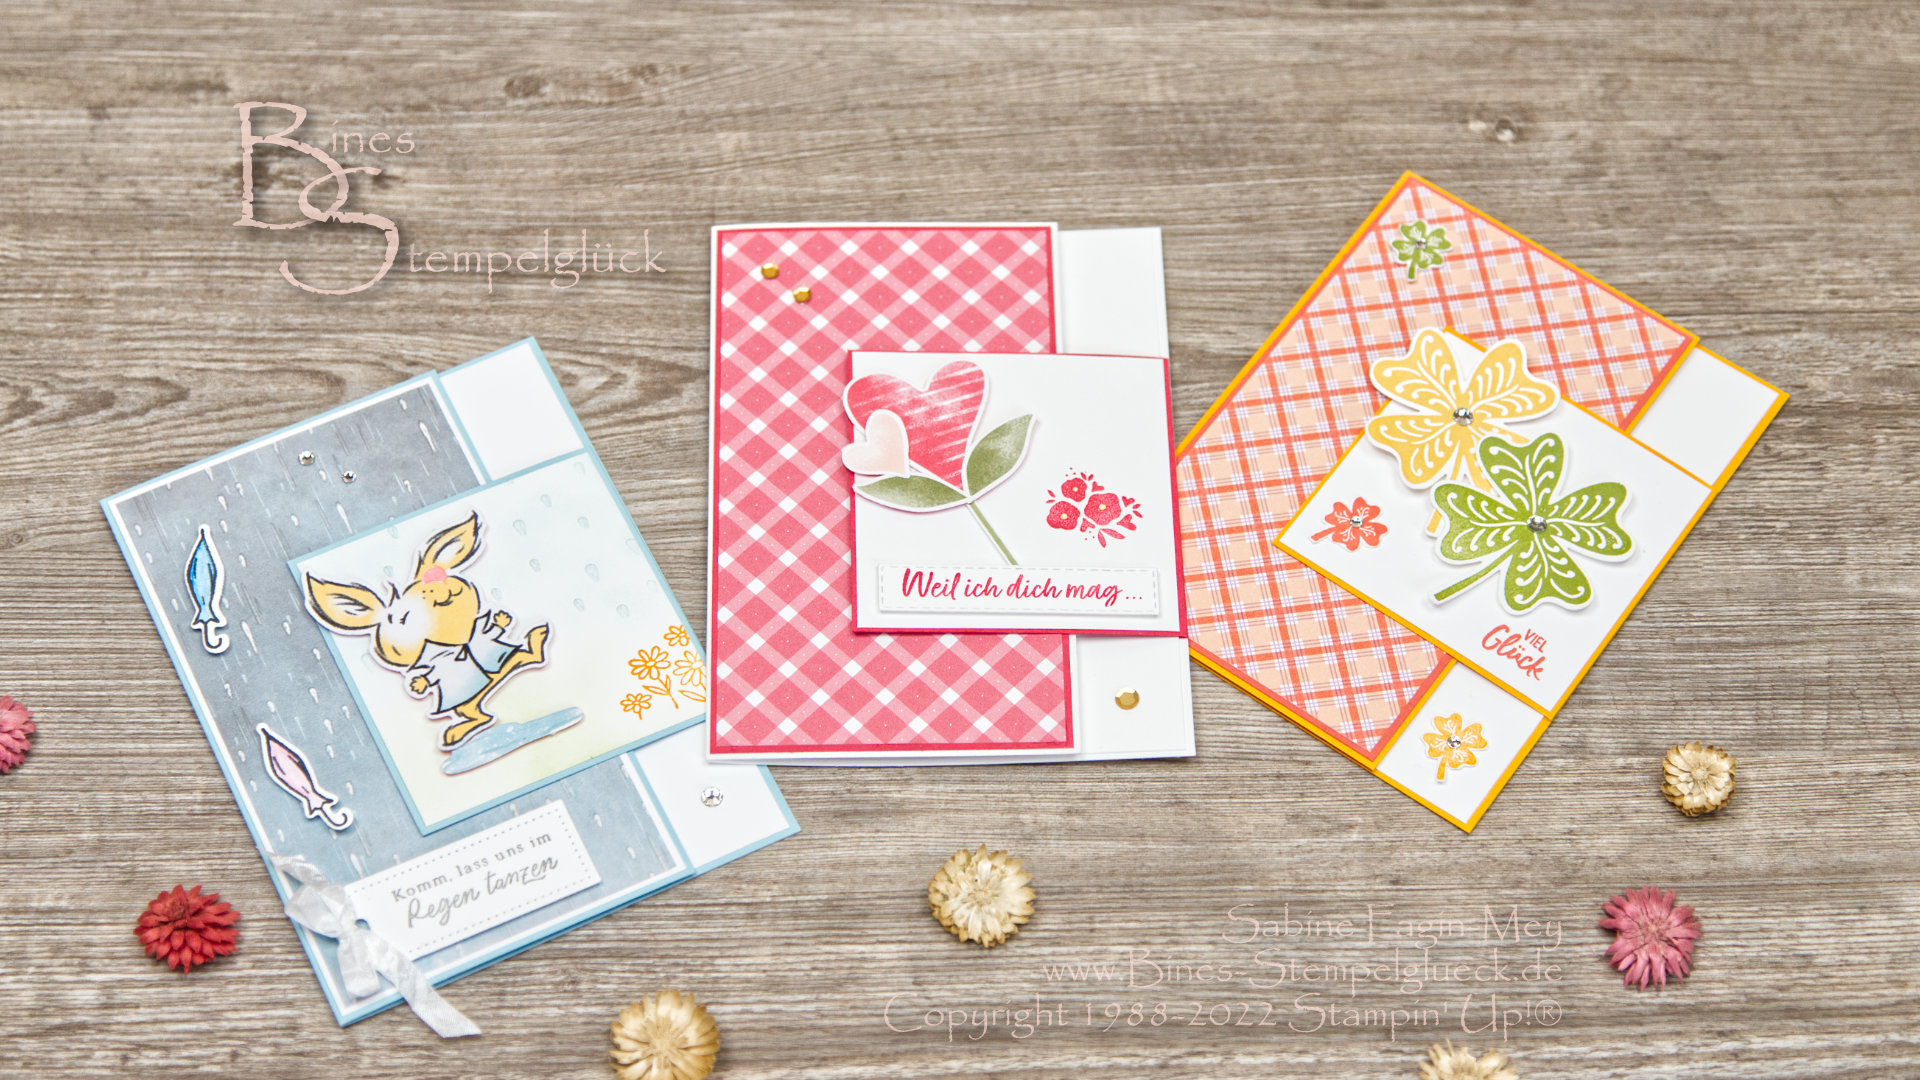 DIY Fun Fold Card mit neuen Produkten - Stampin' Up!